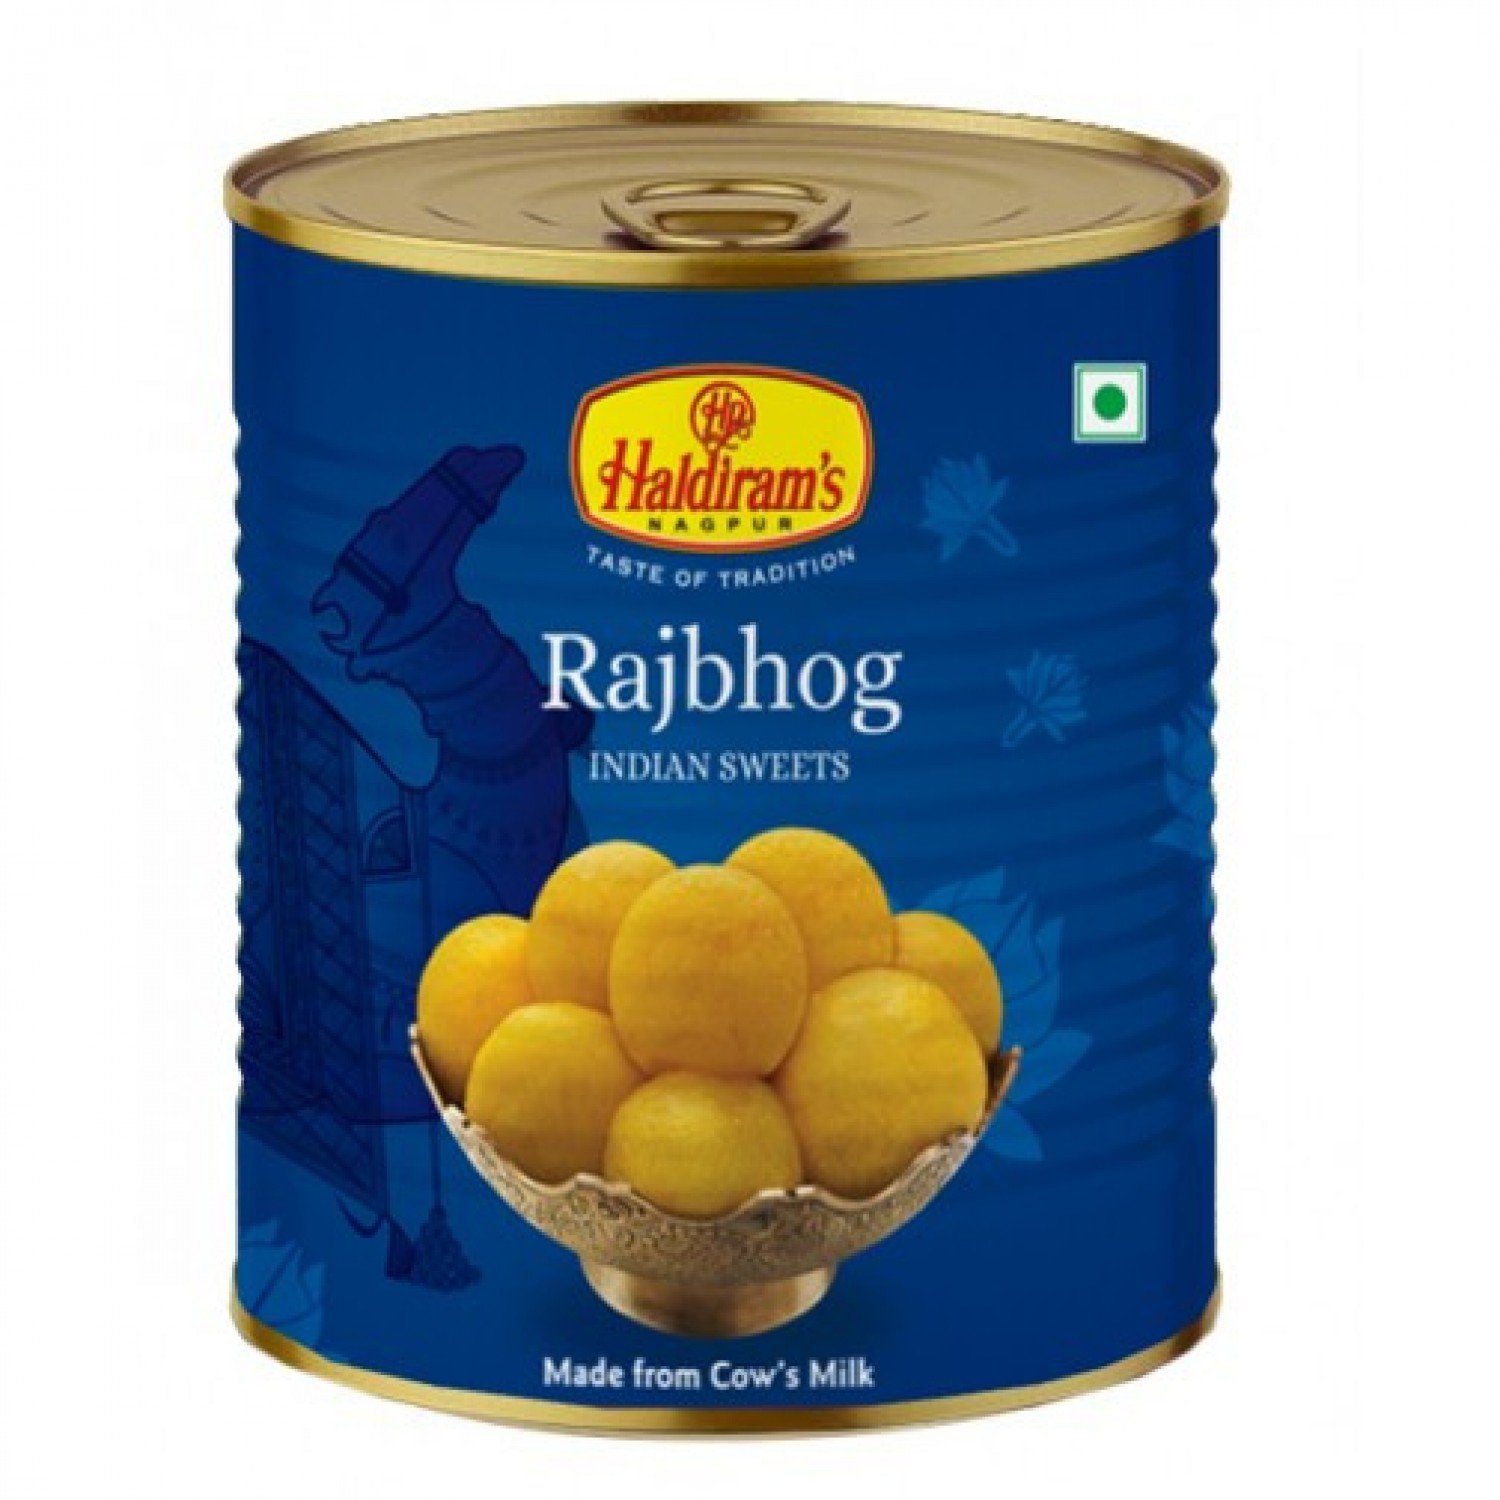 Haldiram Rajbhog 1 KG Tin | দেশী বাজার / देशी बाजार/ بحیرہ روم / Deshi